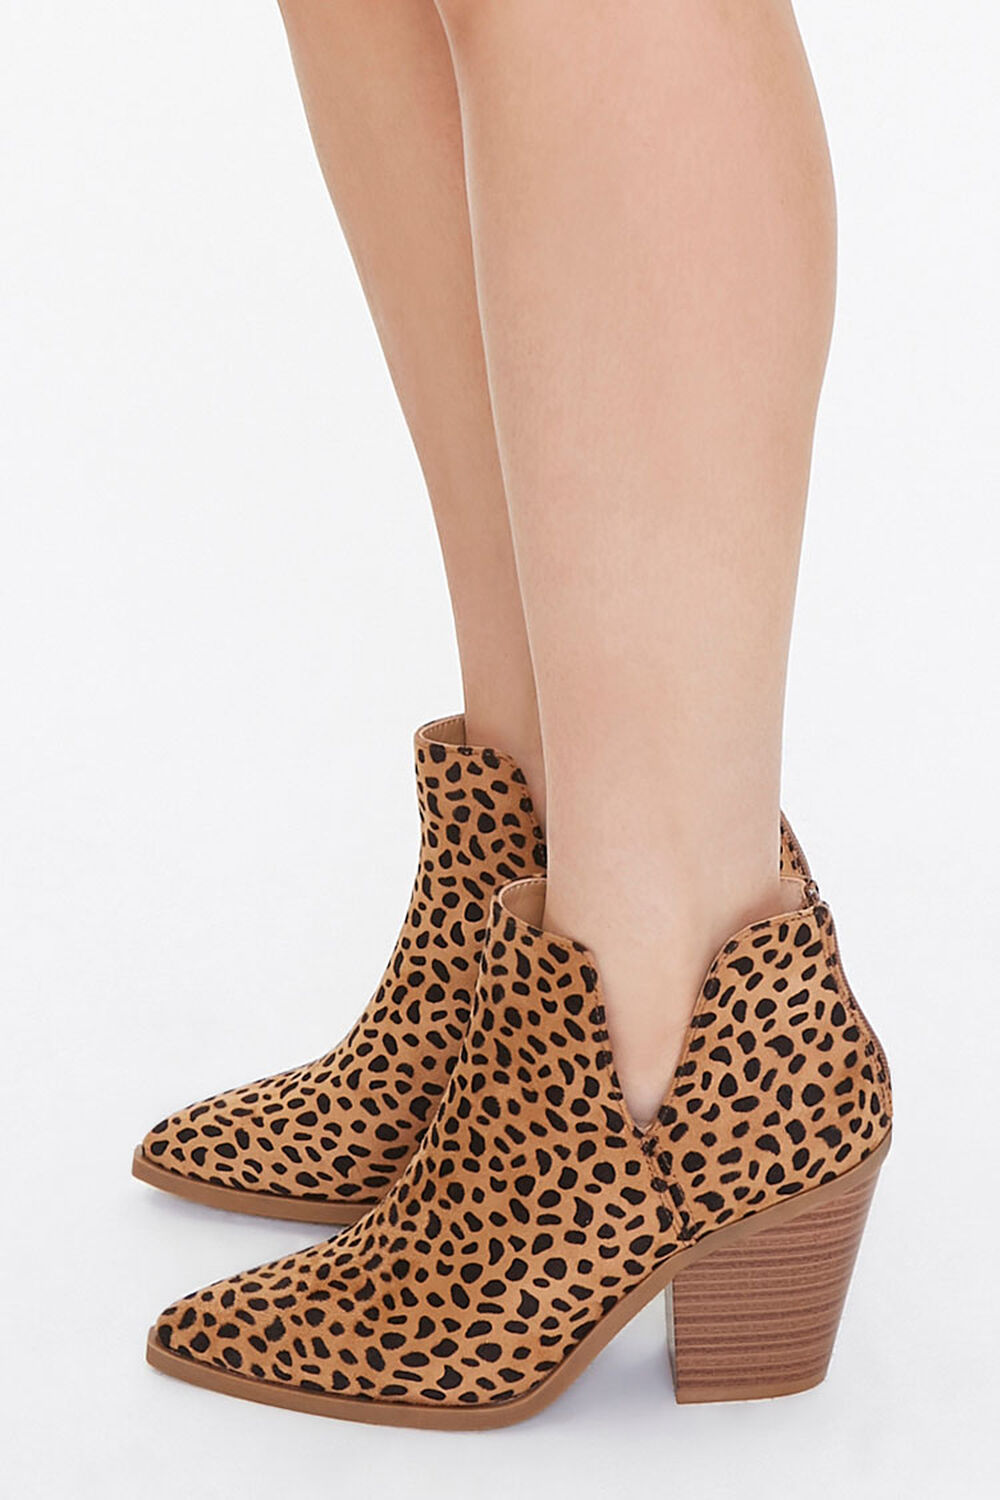 Cheetah Print Block Heel Booties, image 2